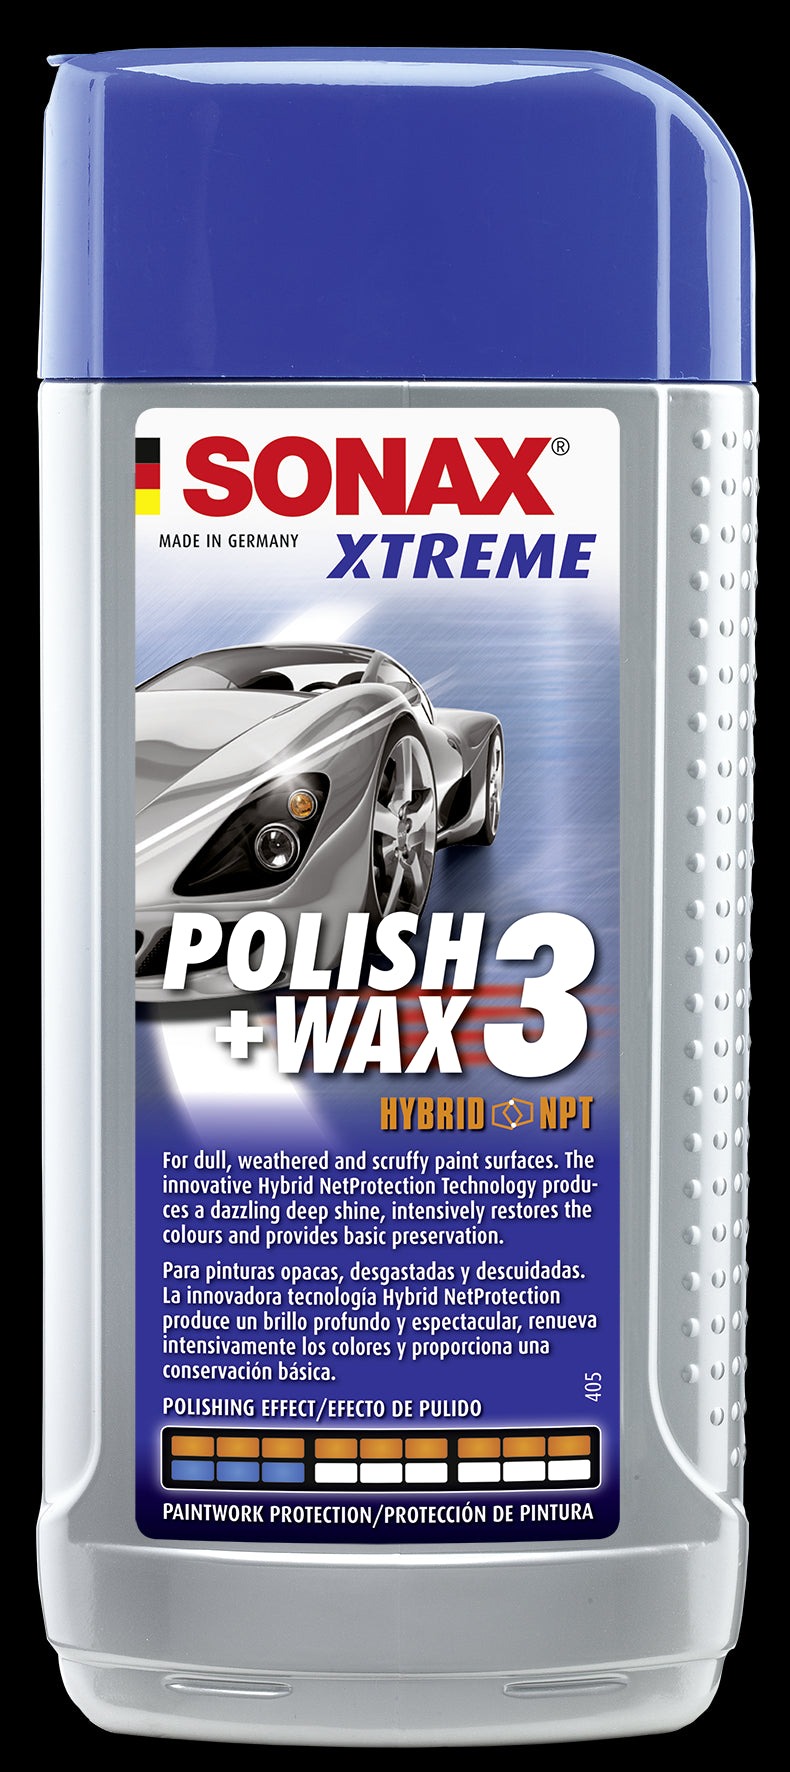 SONAX XTREME Polish + Wax 3 Hybrid NPT